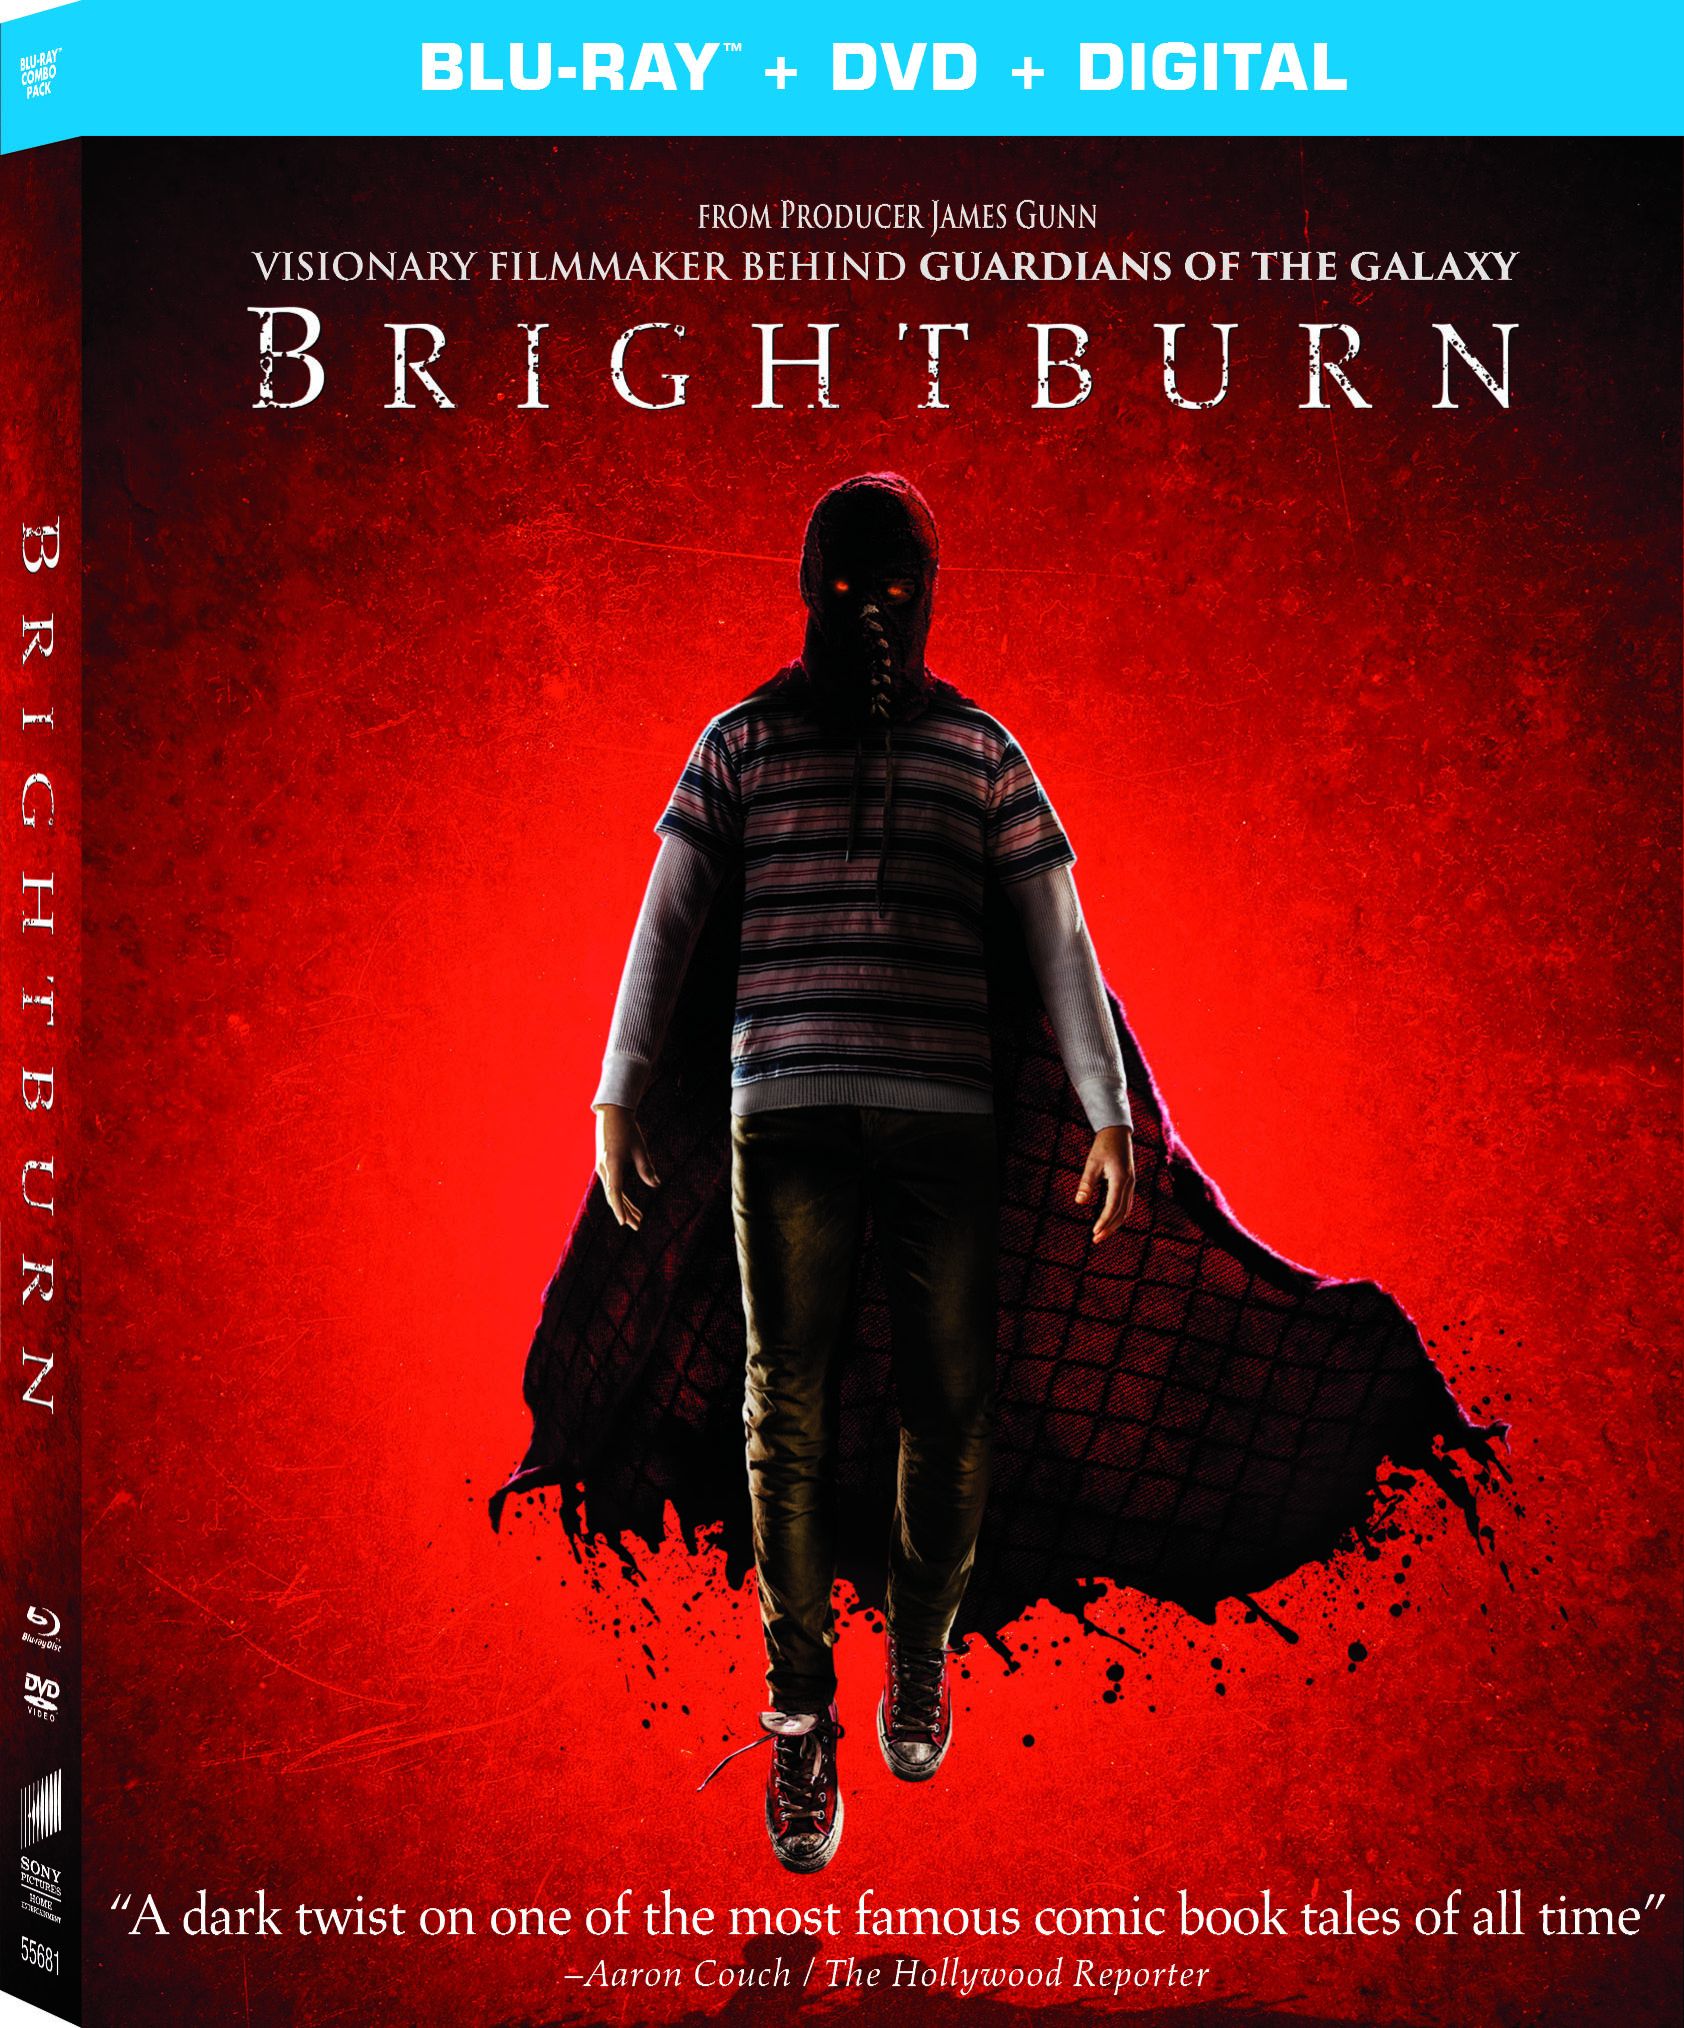 Brightburn Blu-ray